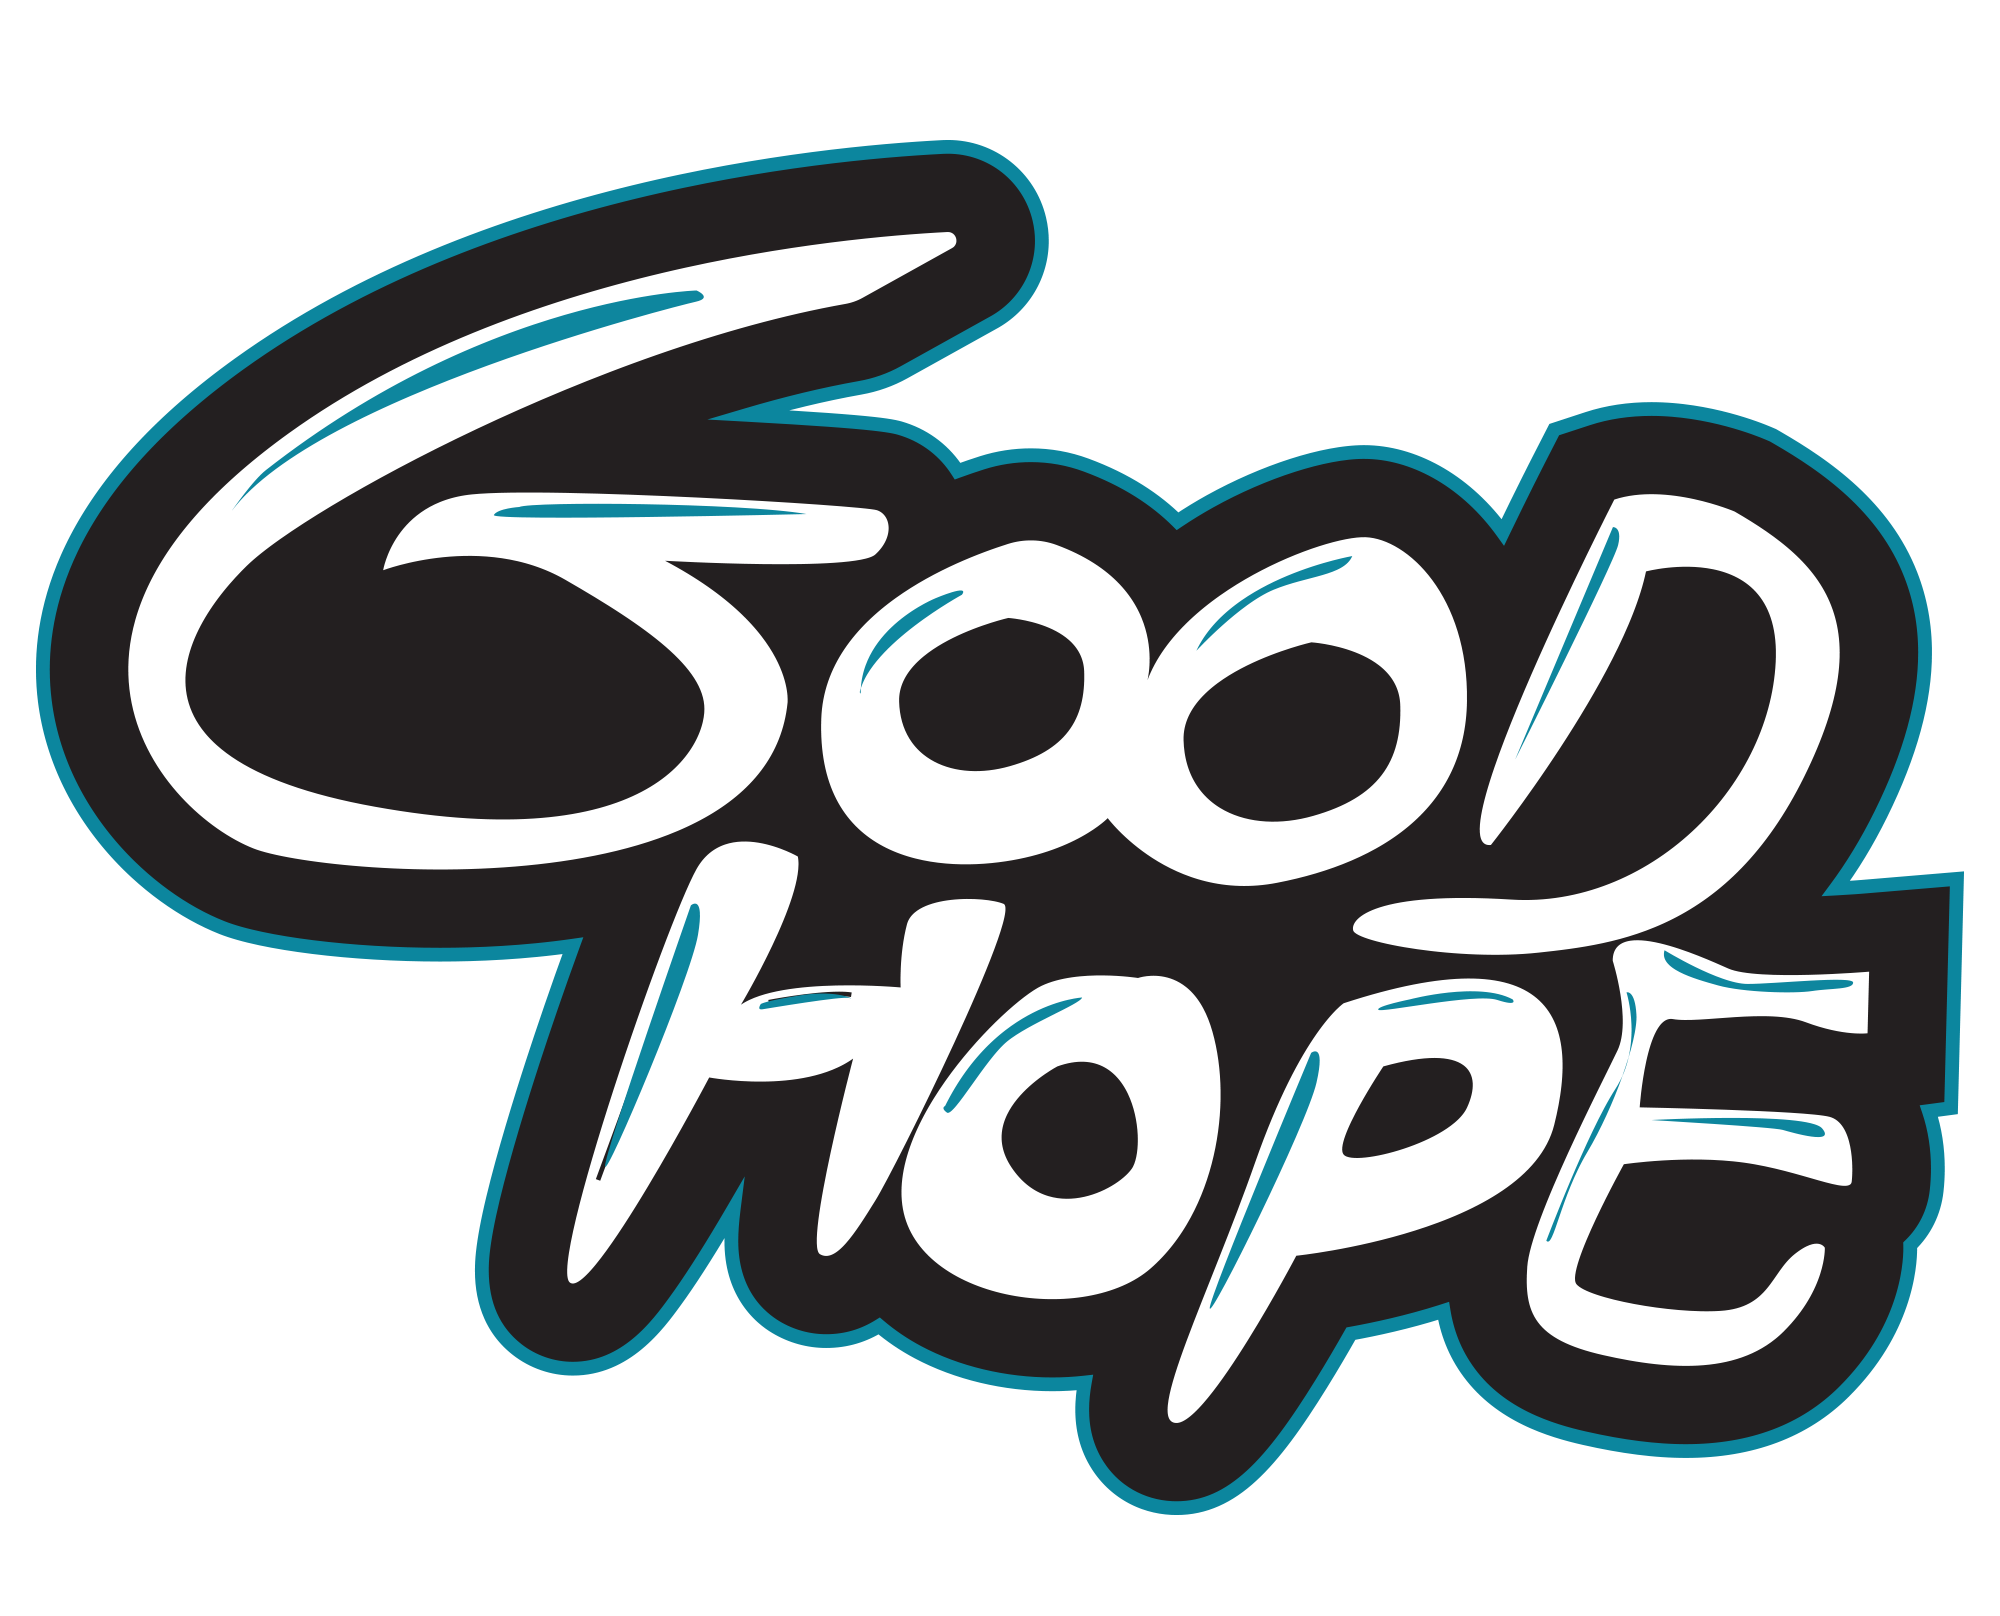 Good Hope